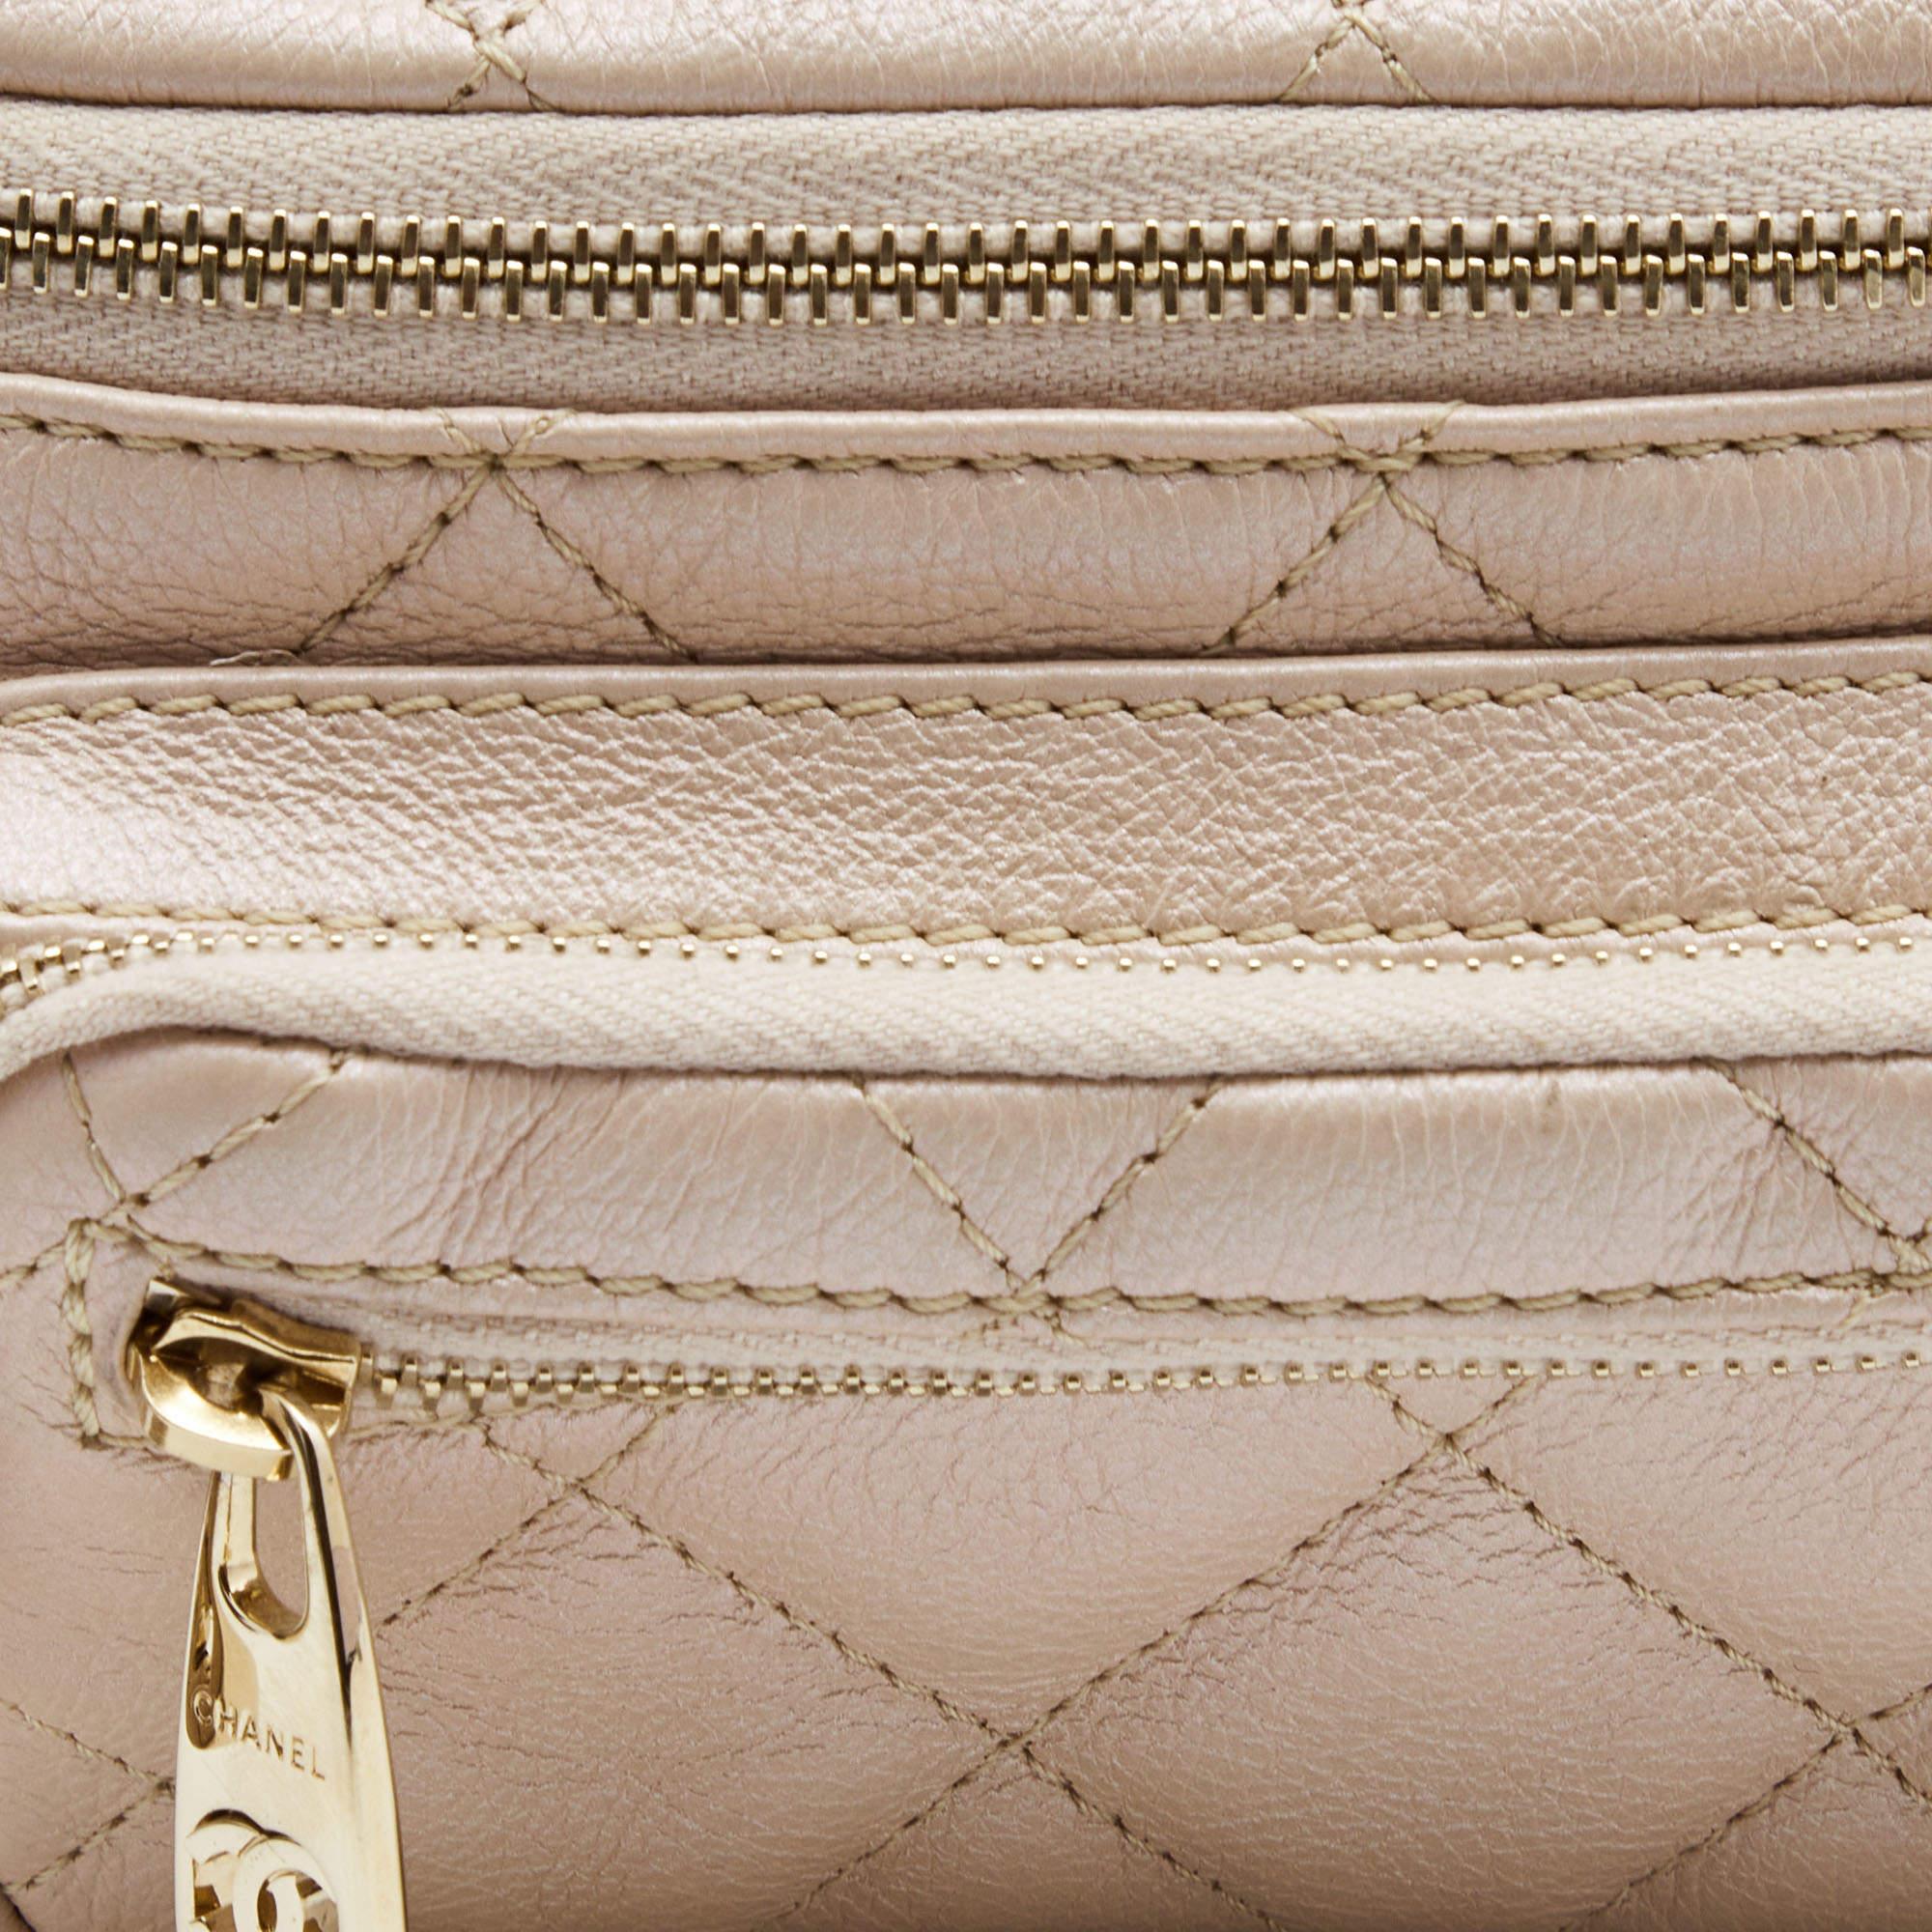 Chanel Beige Quilted Shimmer Leather Fanny Pack Waistbelt Bag 7